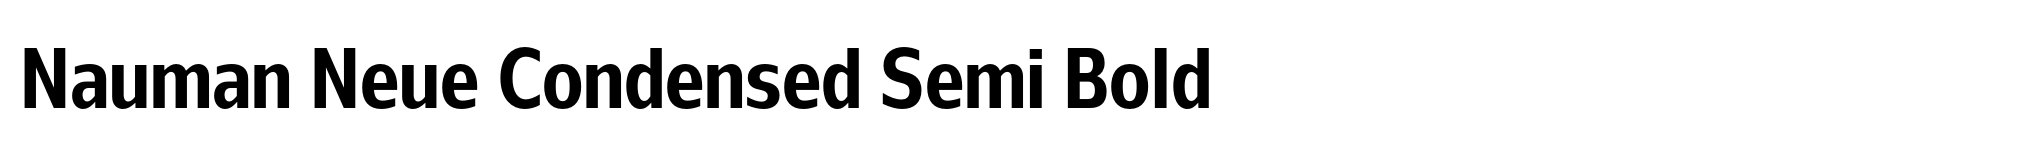 Nauman Neue Condensed Semi Bold image